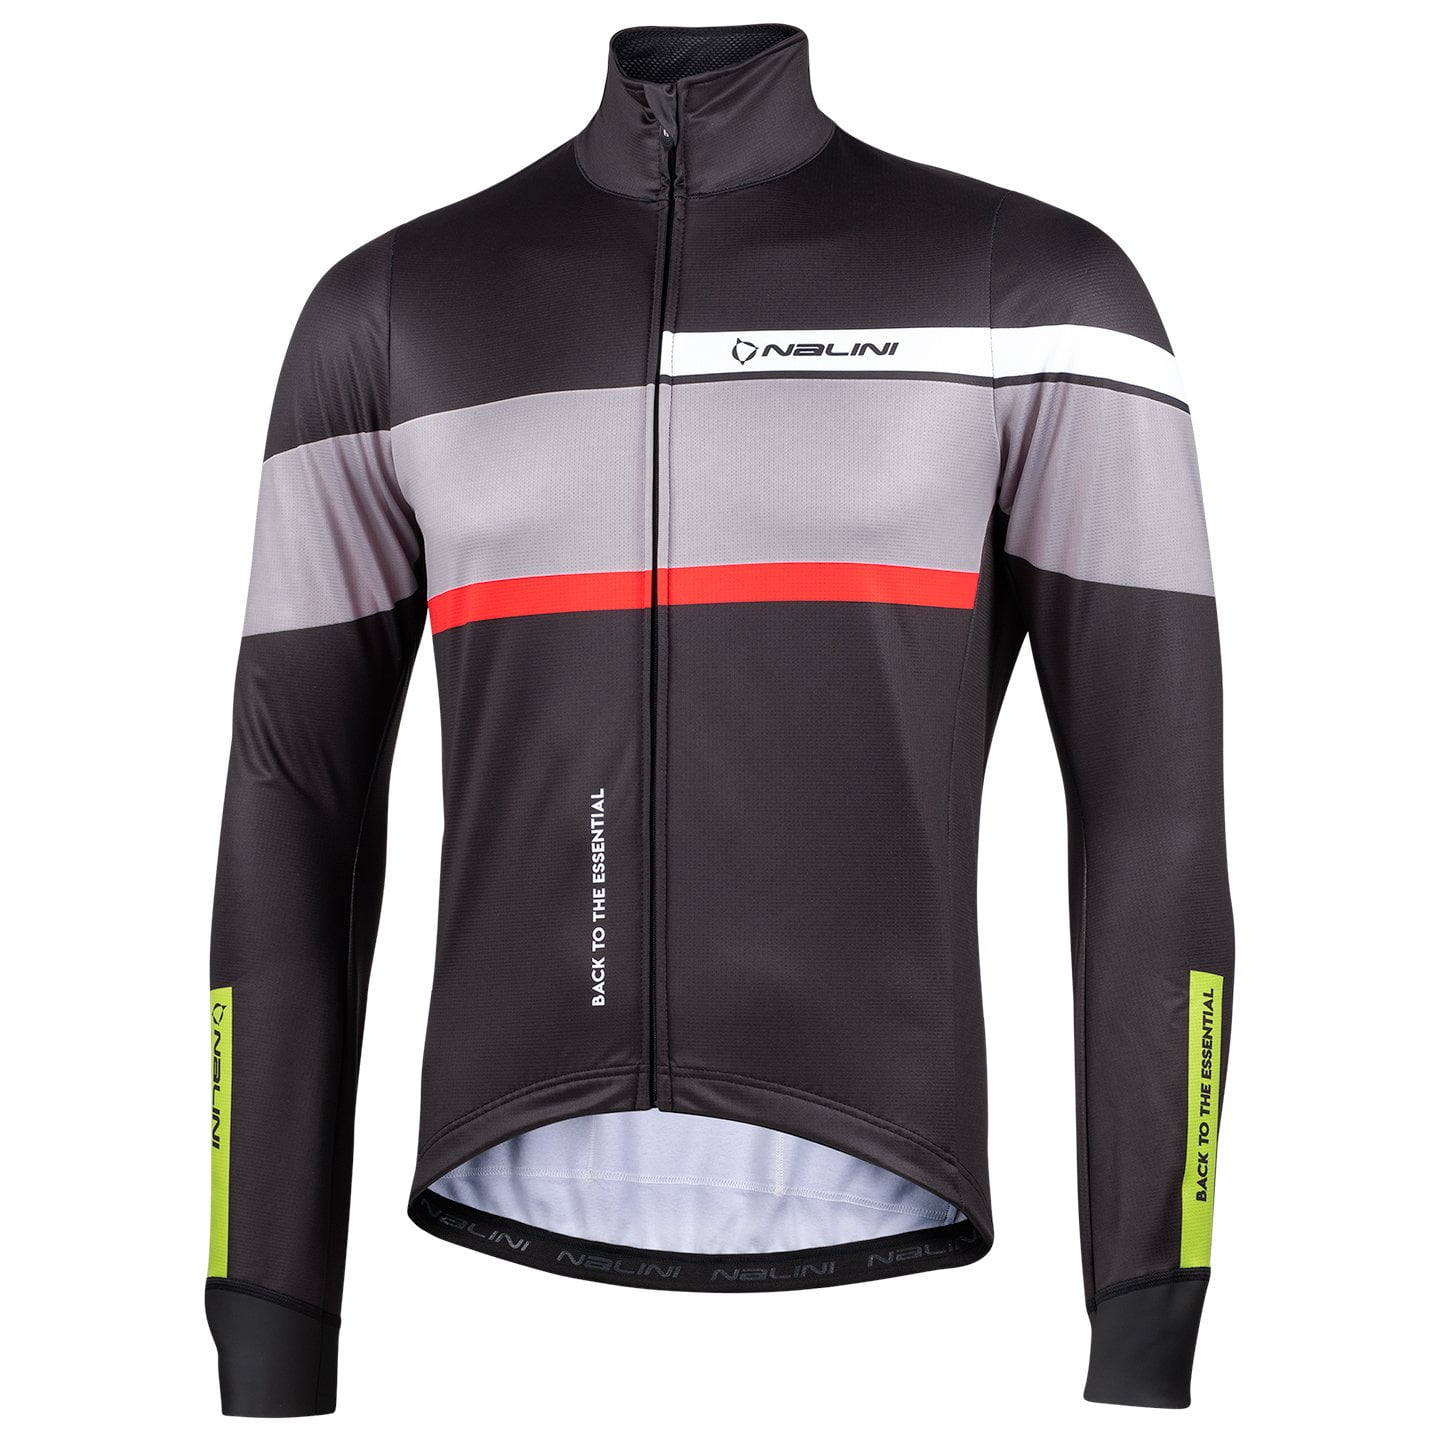 NALINI Winter Jacket Traguardo Thermal Jacket, for men, size XL, Cycle jacket, Cycle gear